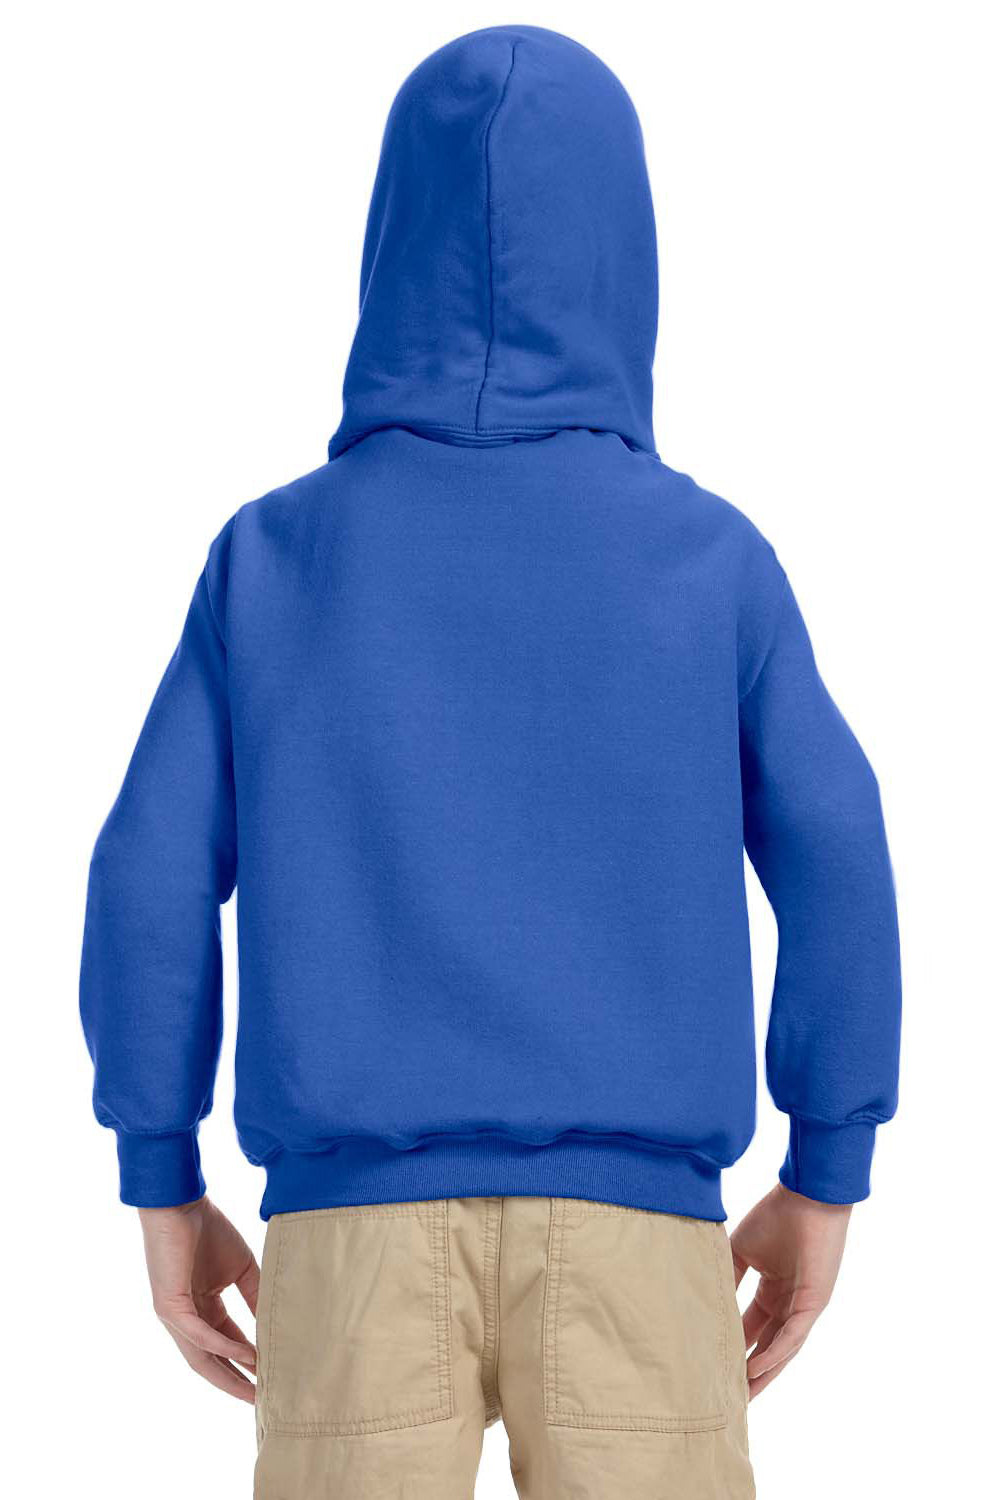 Gildan G185B Youth Hooded Sweatshirt Hoodie Royal Blue Back